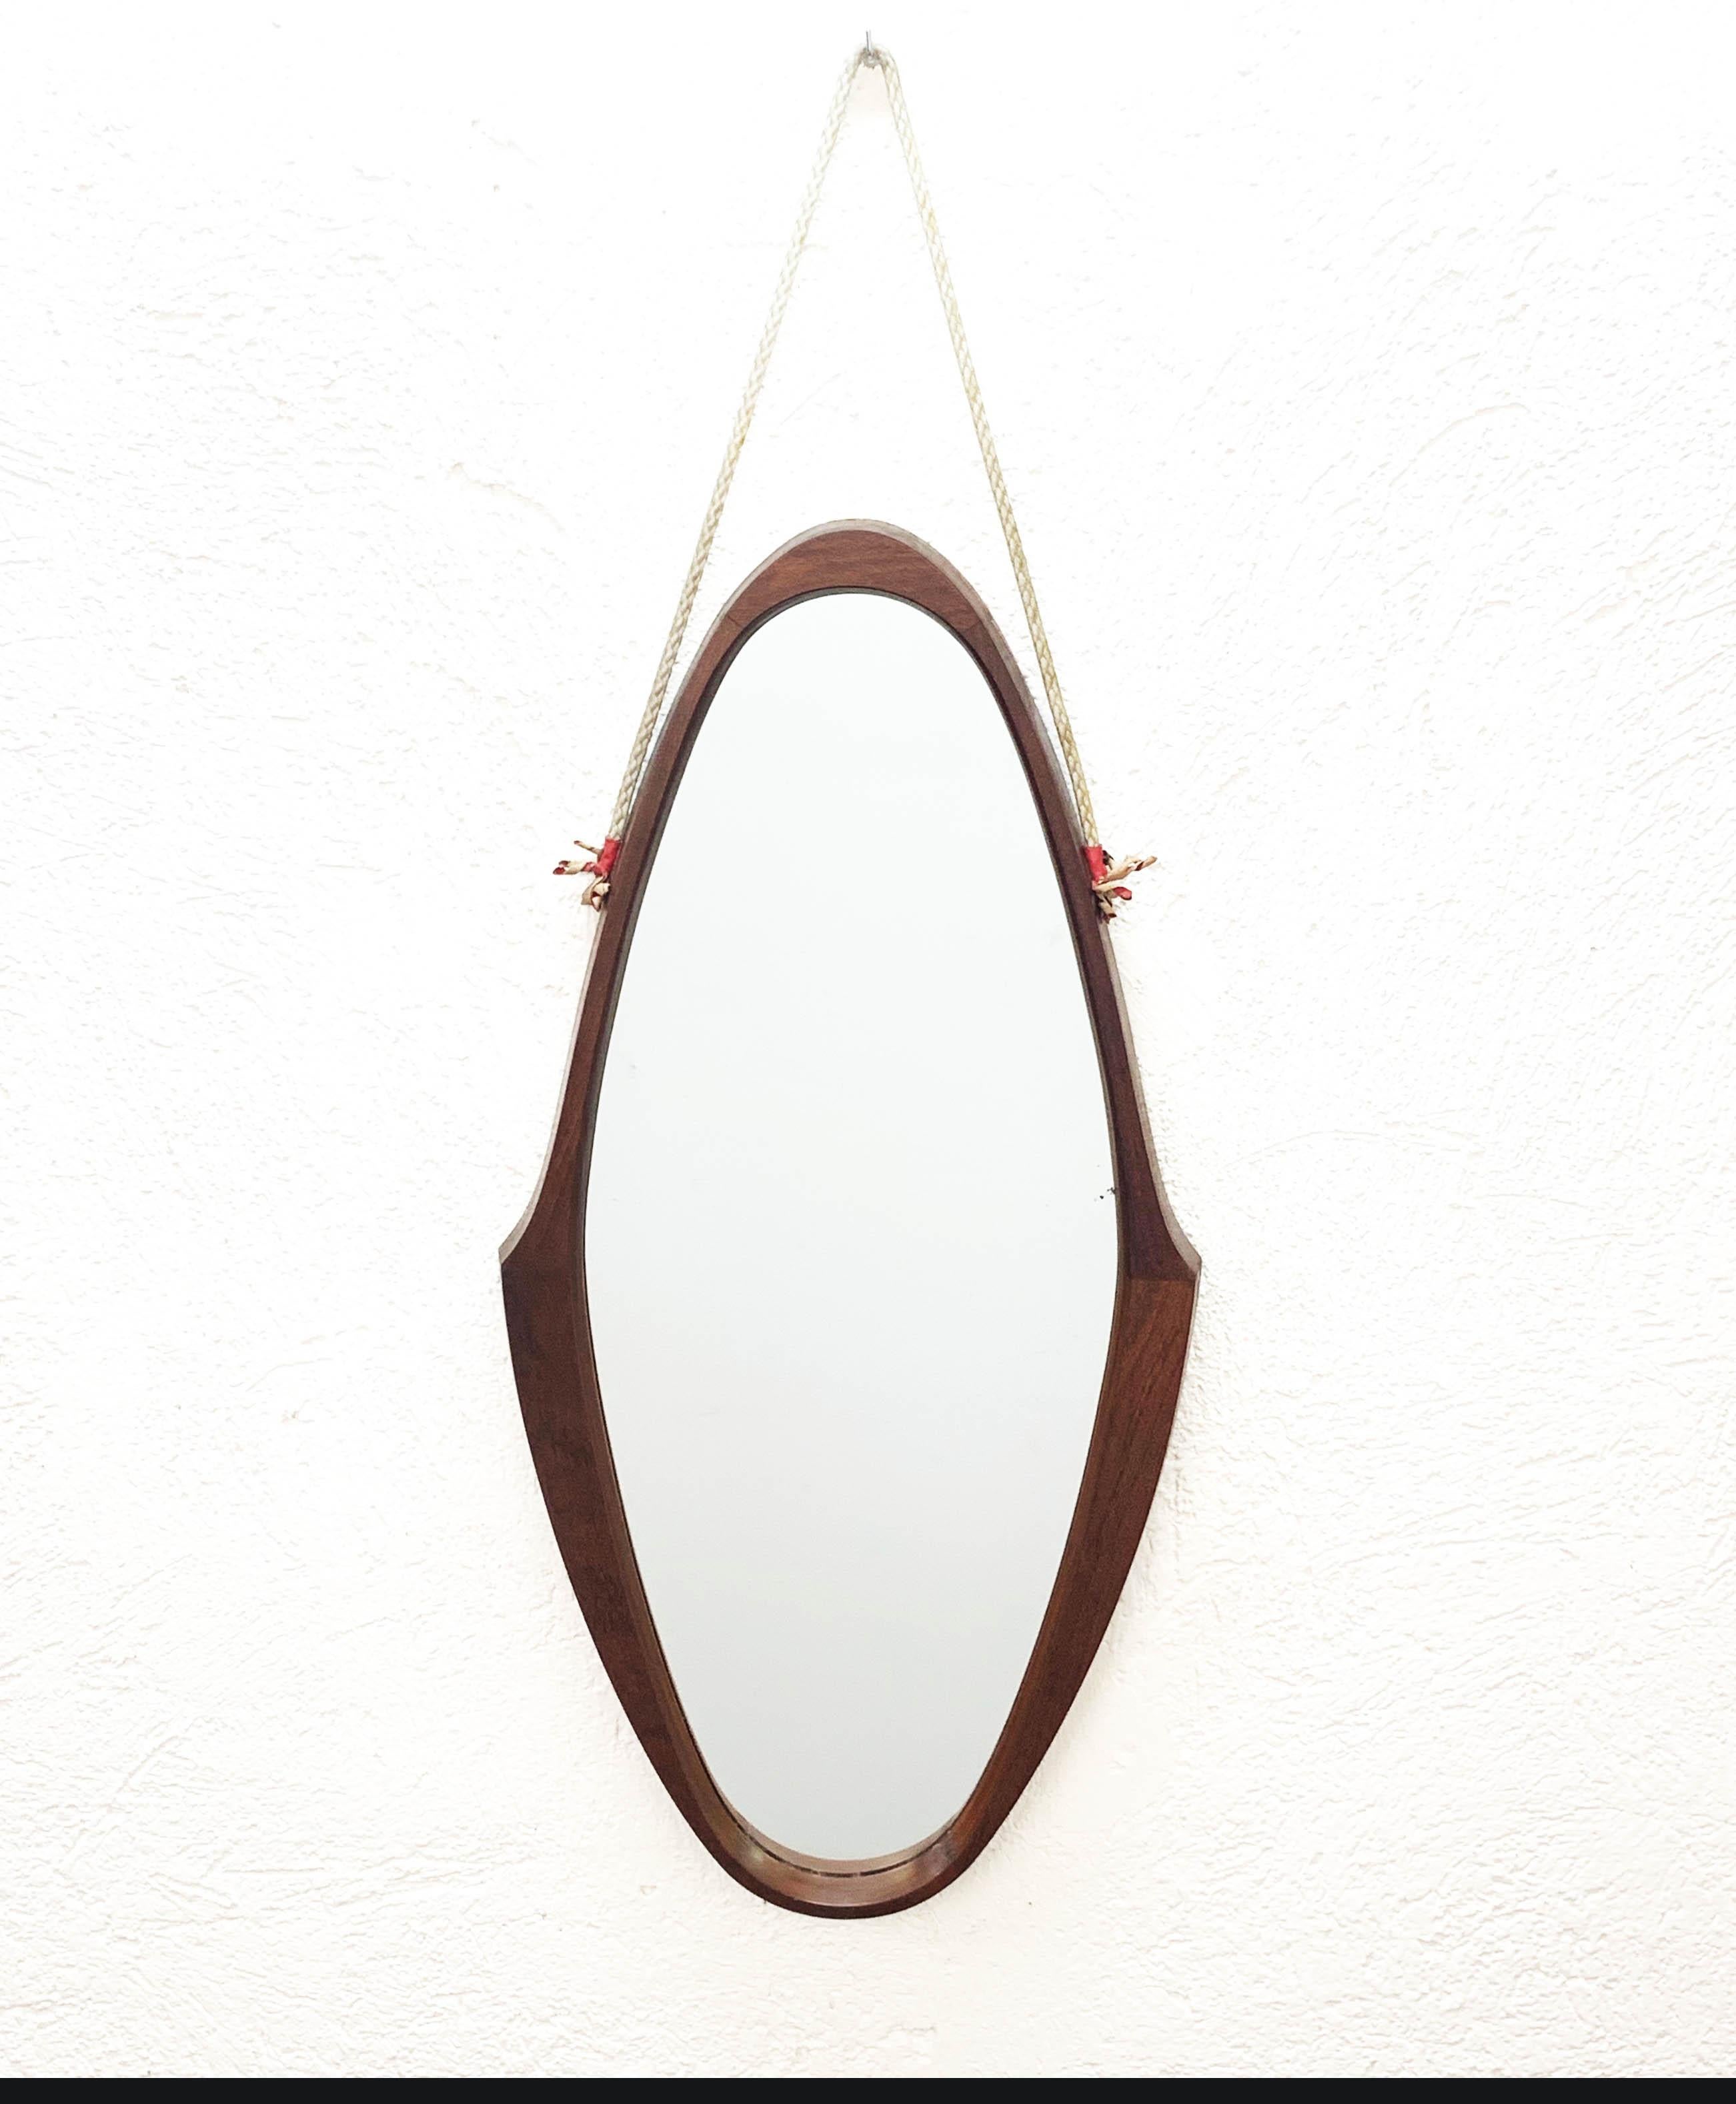 Midcentury Oval Teak, Nylon Rope and Leather Italian Wall Framed Mirror, 1960s 5